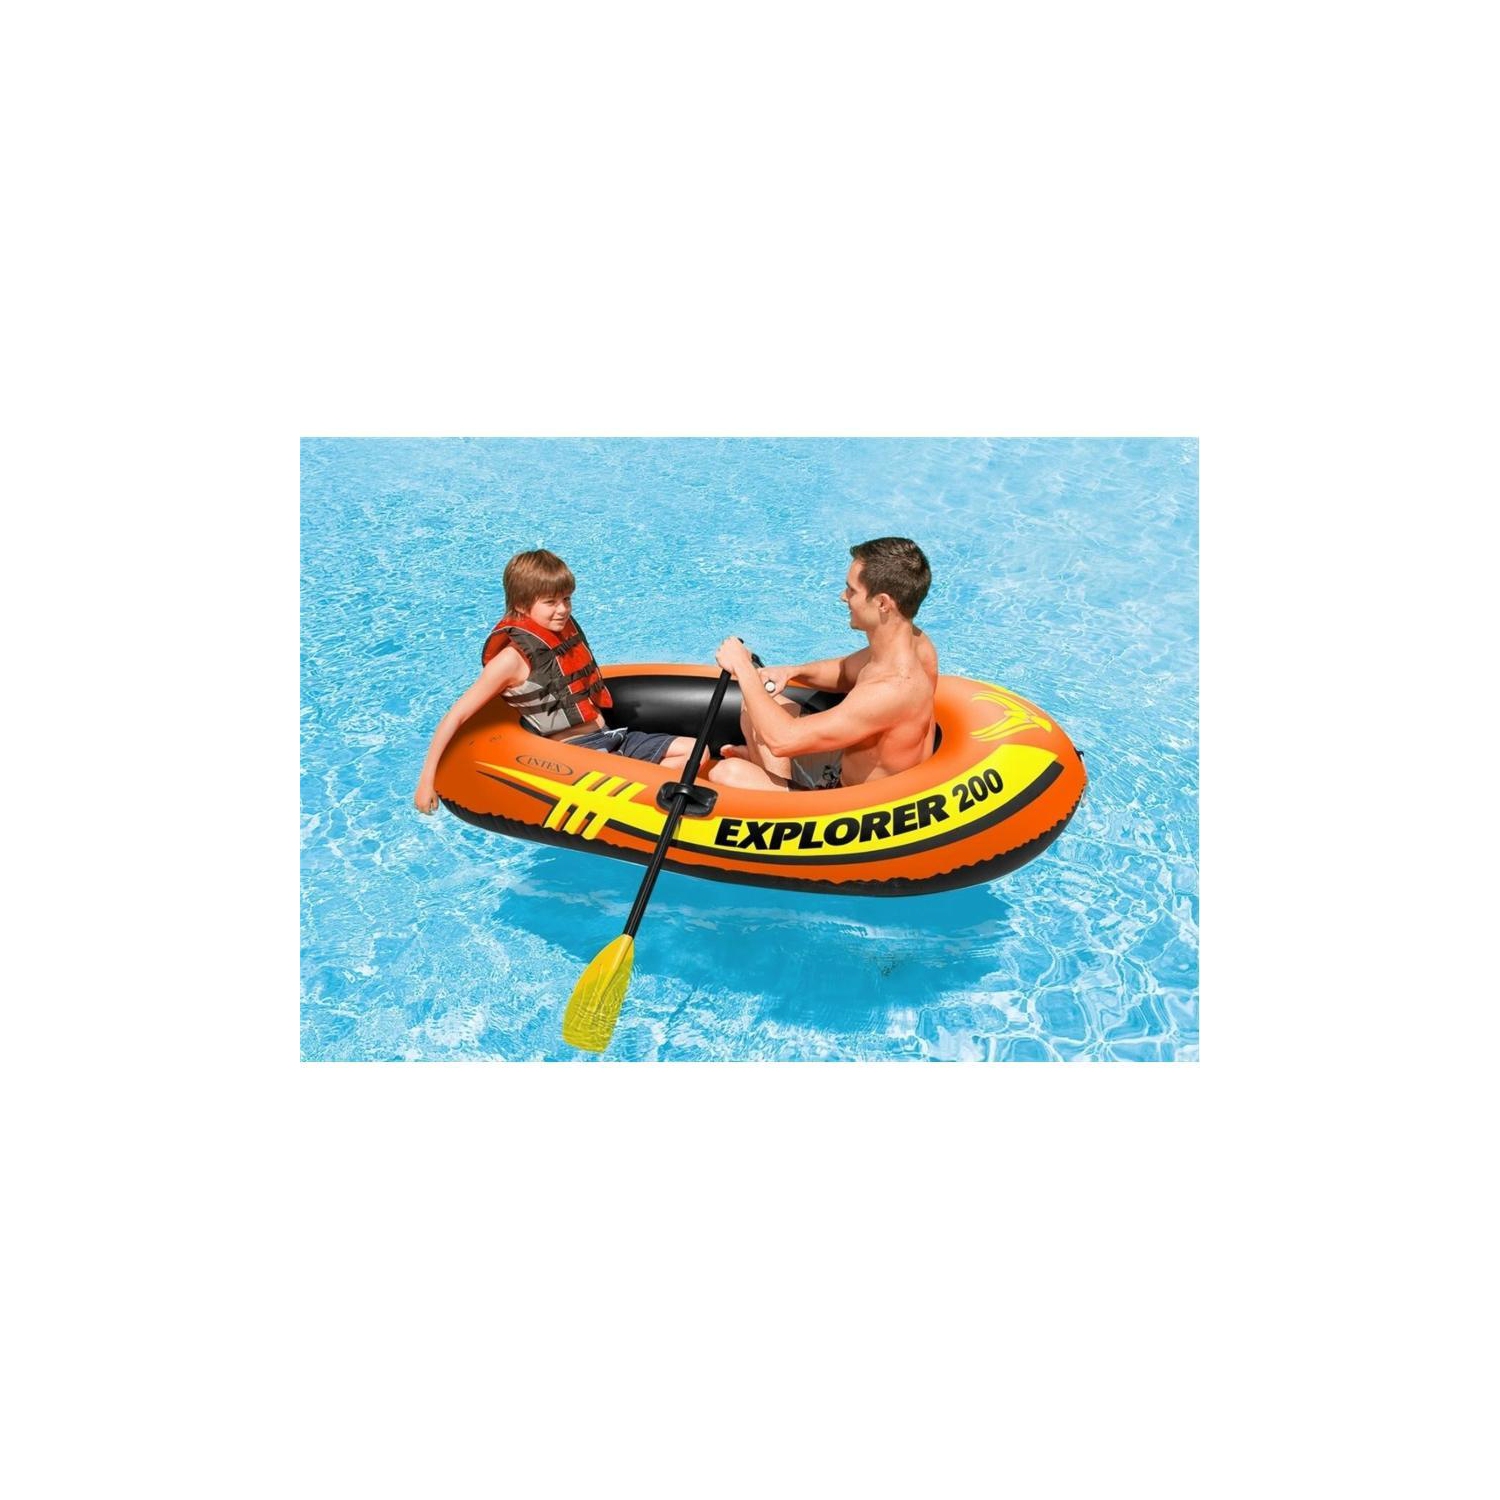 Intex - Explorer 200 Inflatable Boat Capacity of 2 People, Orange